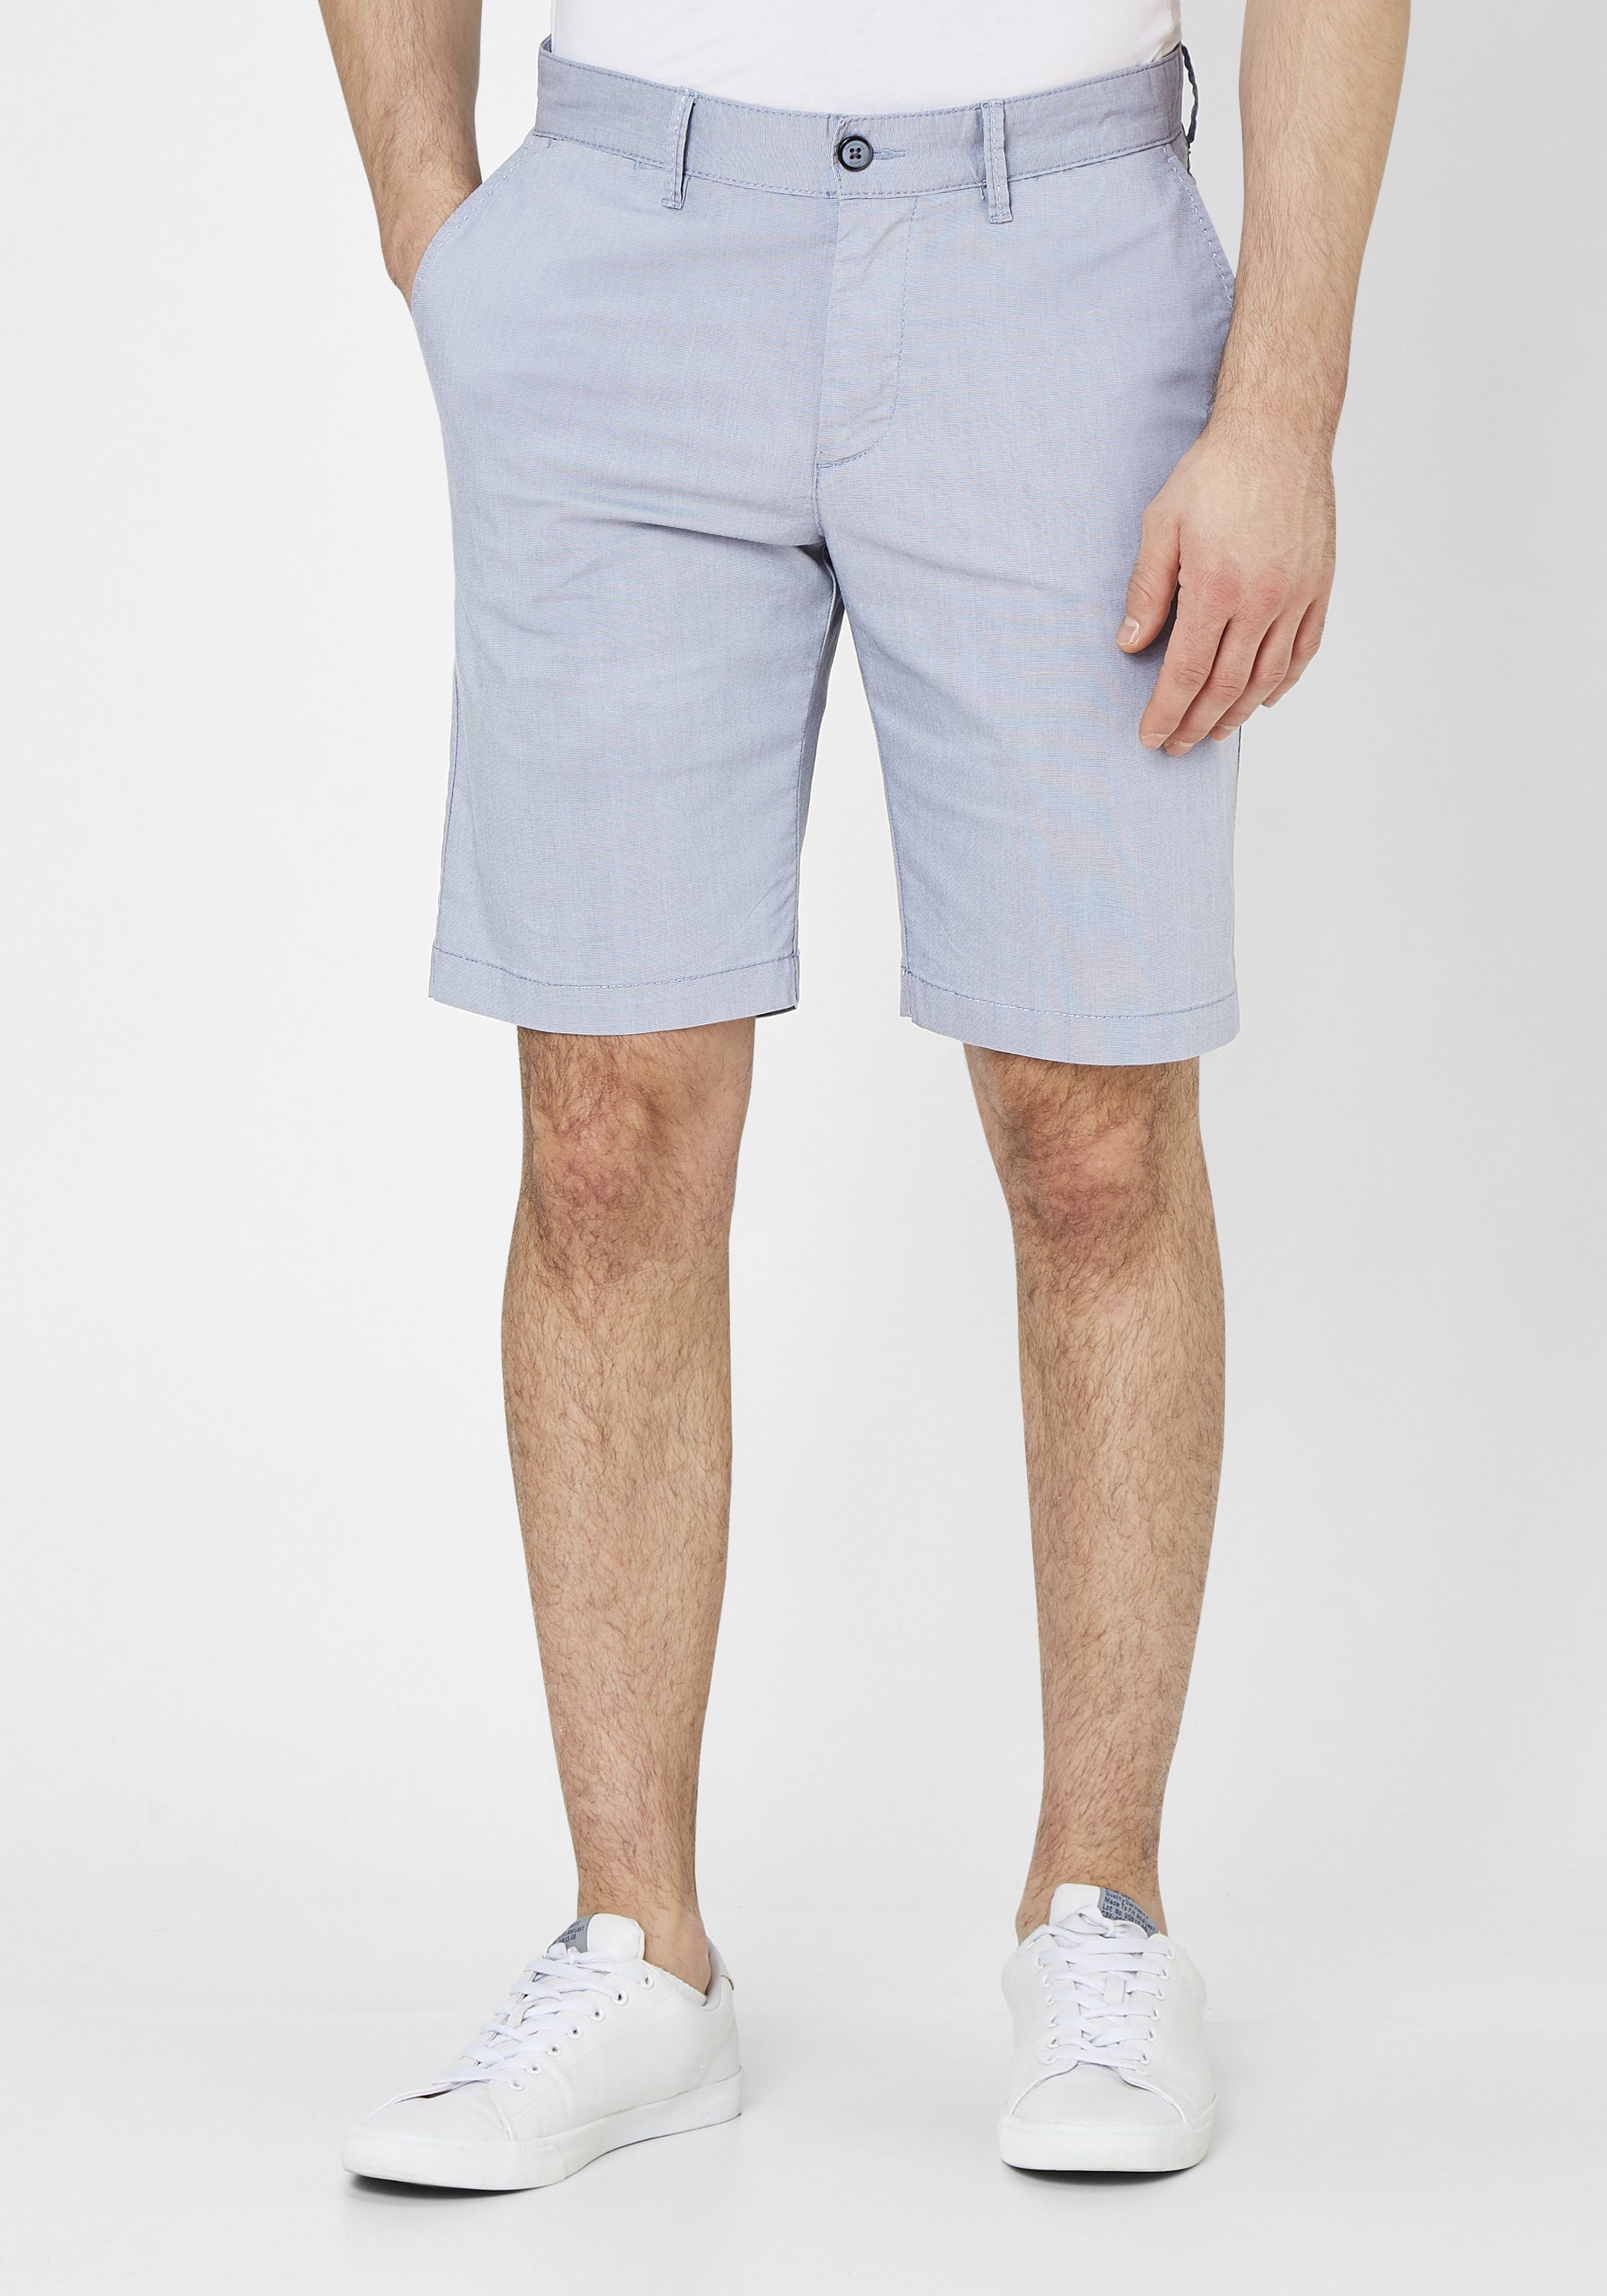 Sea blue Chino Stretch Shorts super S4 Shorts Jackets